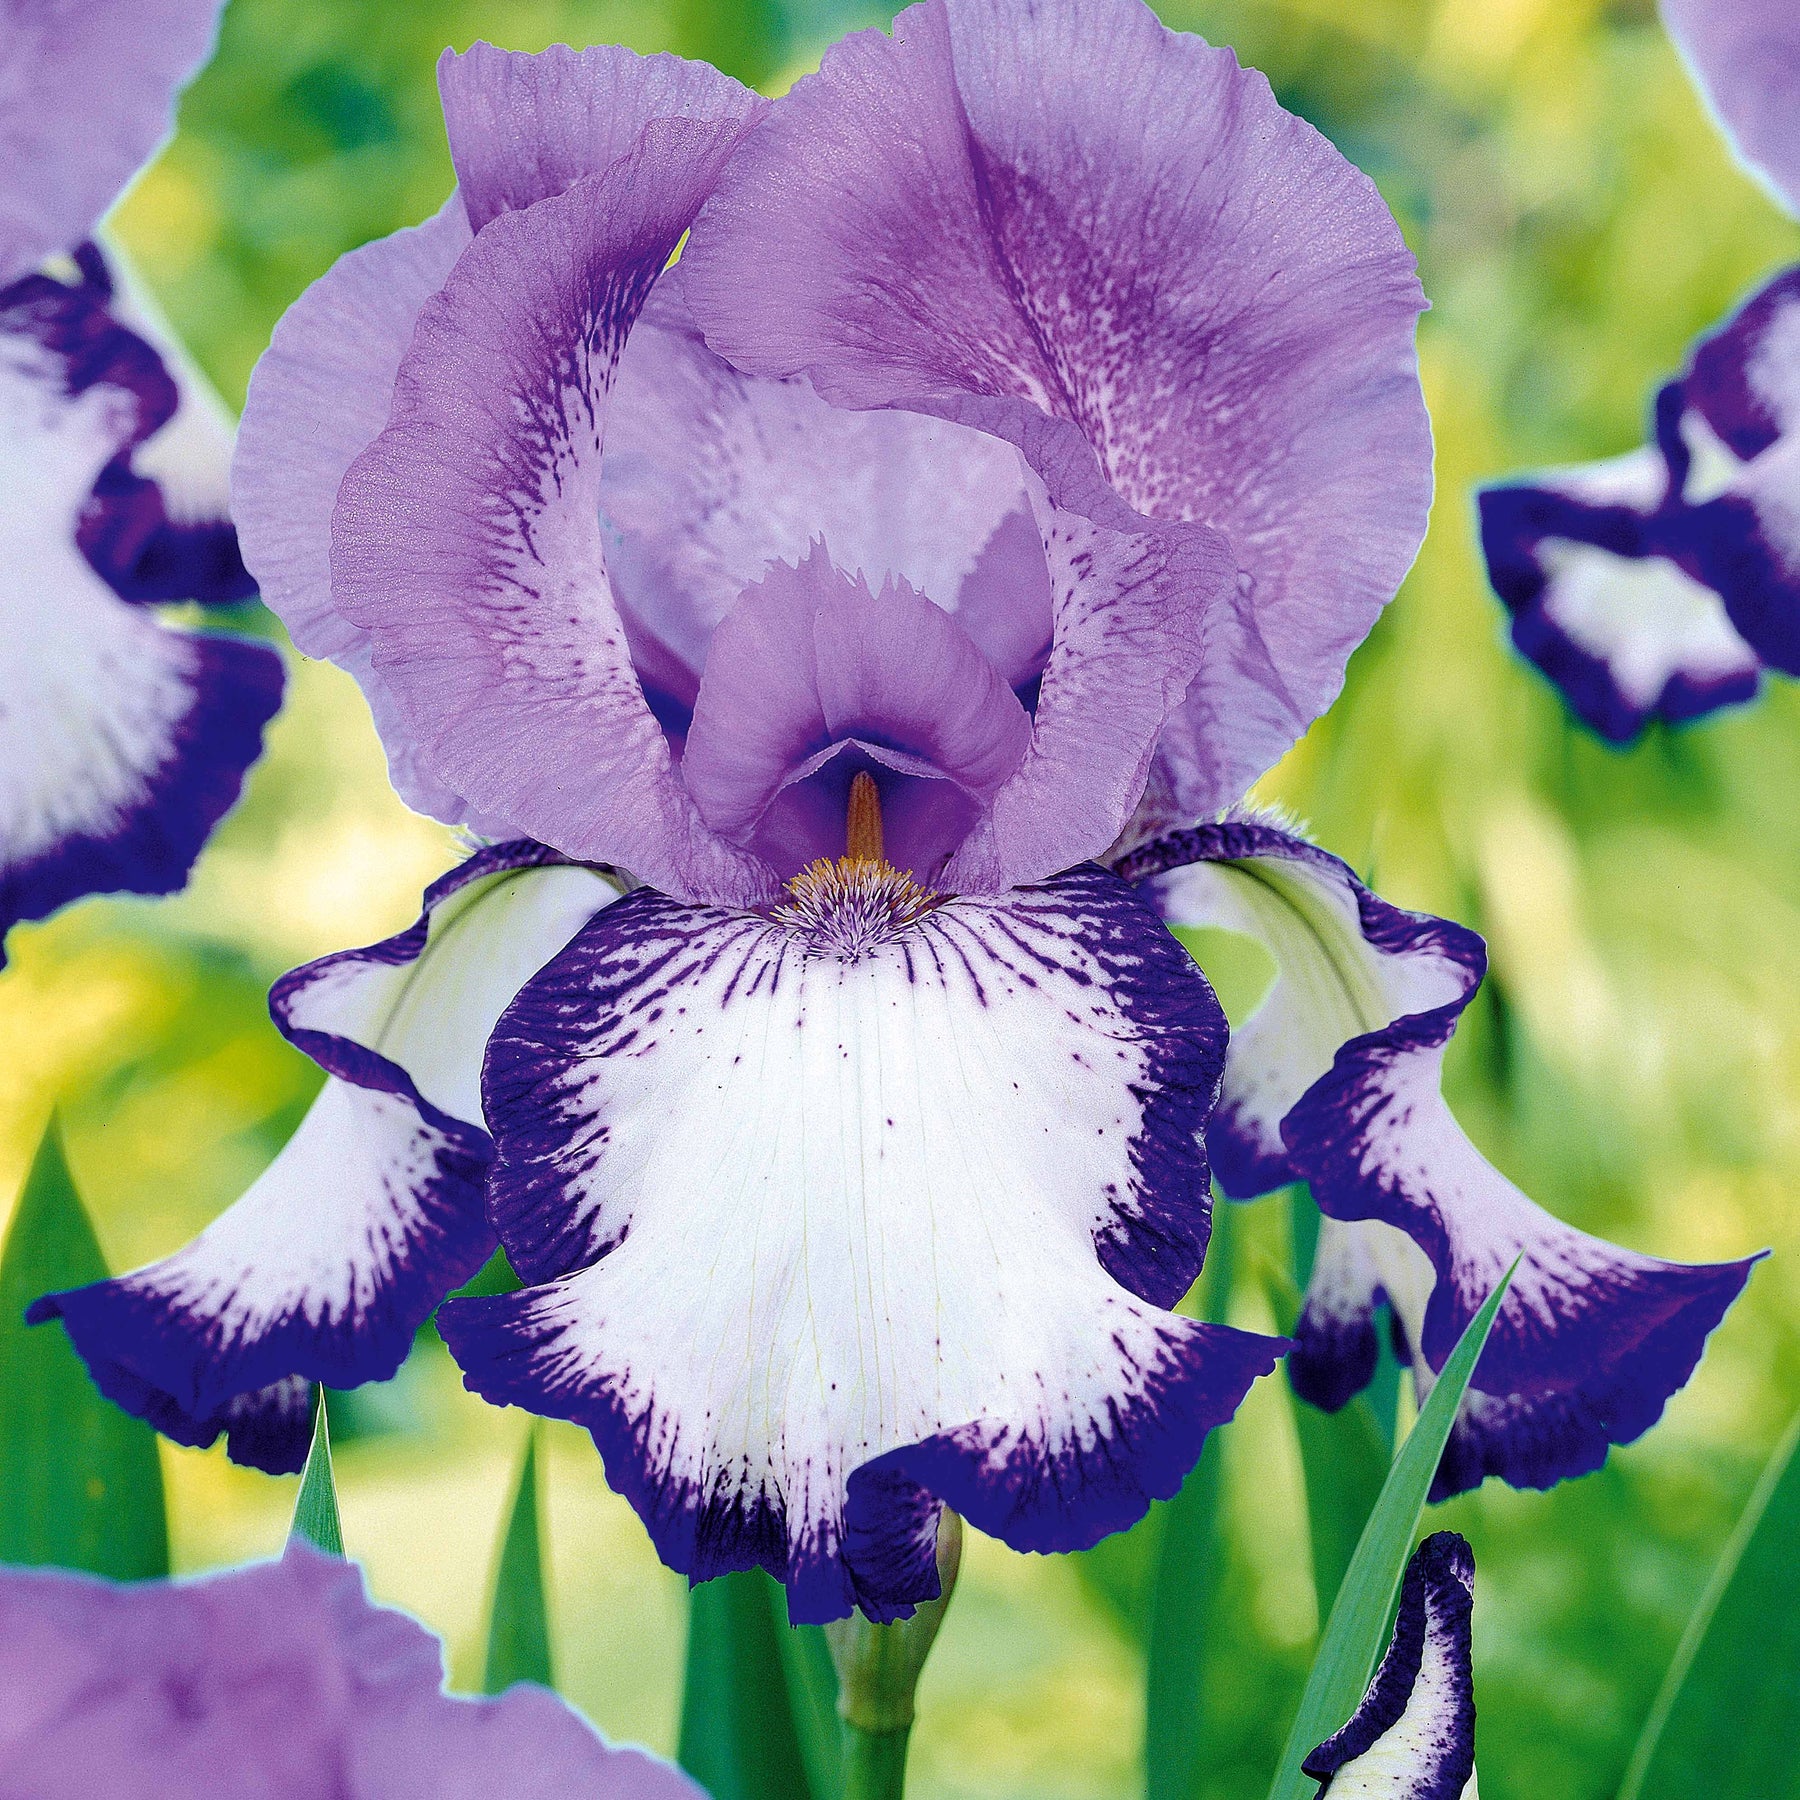 Collection de 6 Iris de jardin : Lasso, Bordure, Sangreal - Iris germanica  (2 lasso, 2 bordure, 2 sangreal)